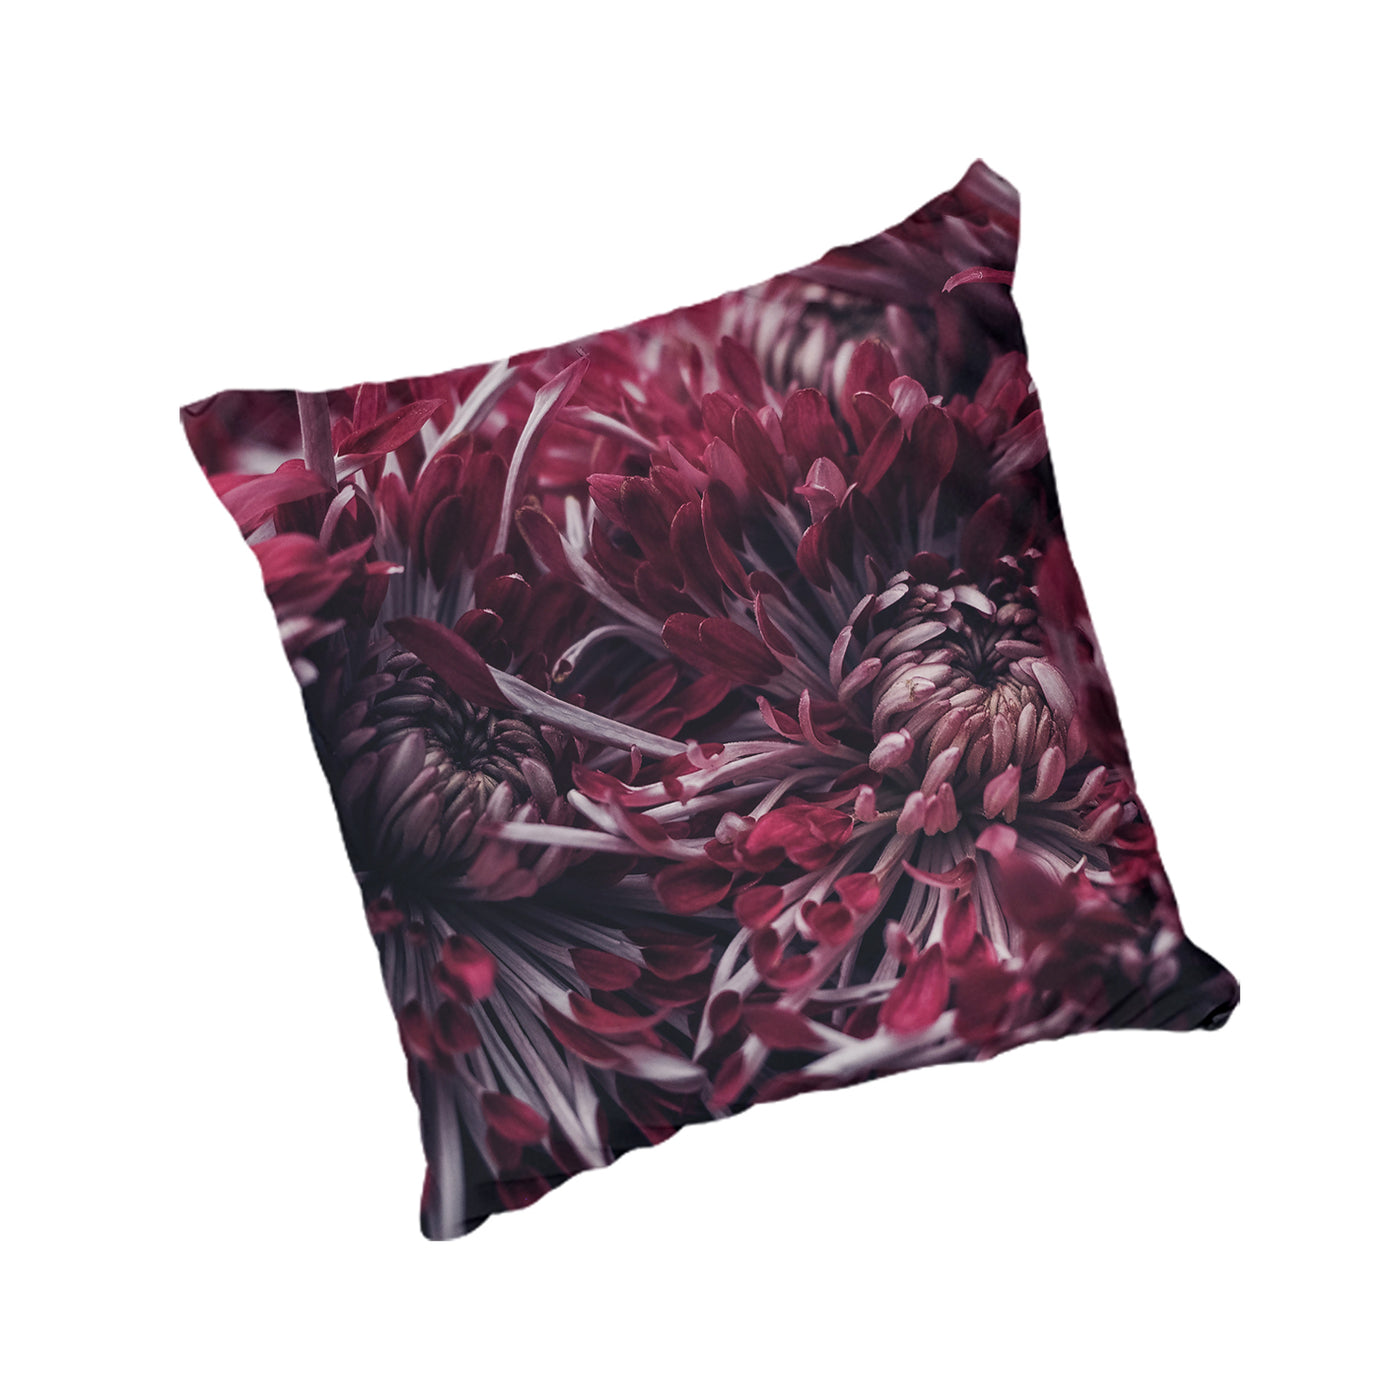 Burgundy Flowers Design on Scatter Cushion